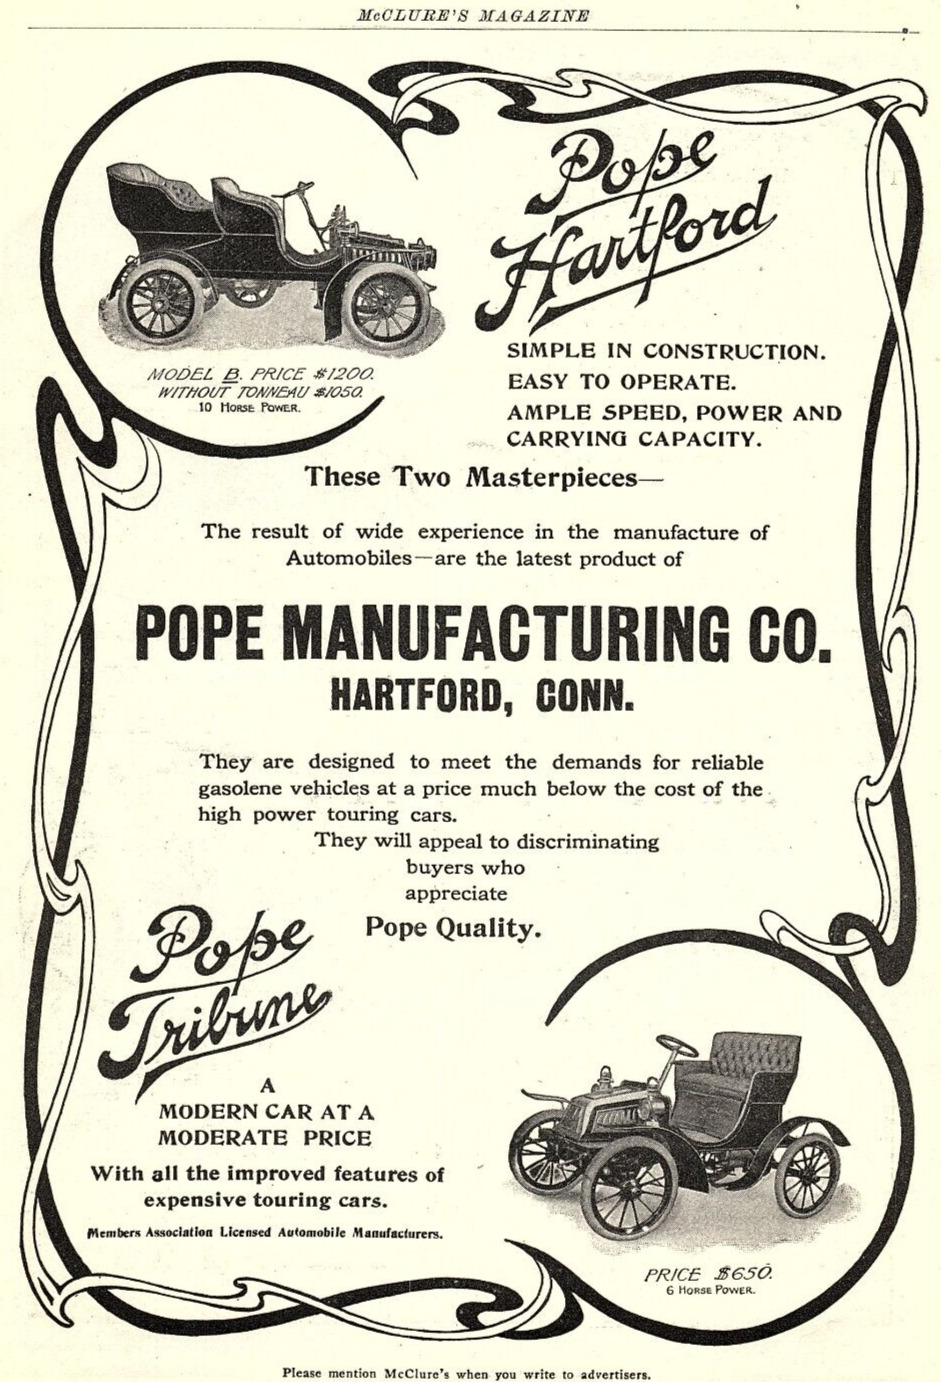 1904 POPE HARTFORD POPE TRIBUNE AUTOMOBILE CO CONN. PRINT ADVERTISEMENT Z1828